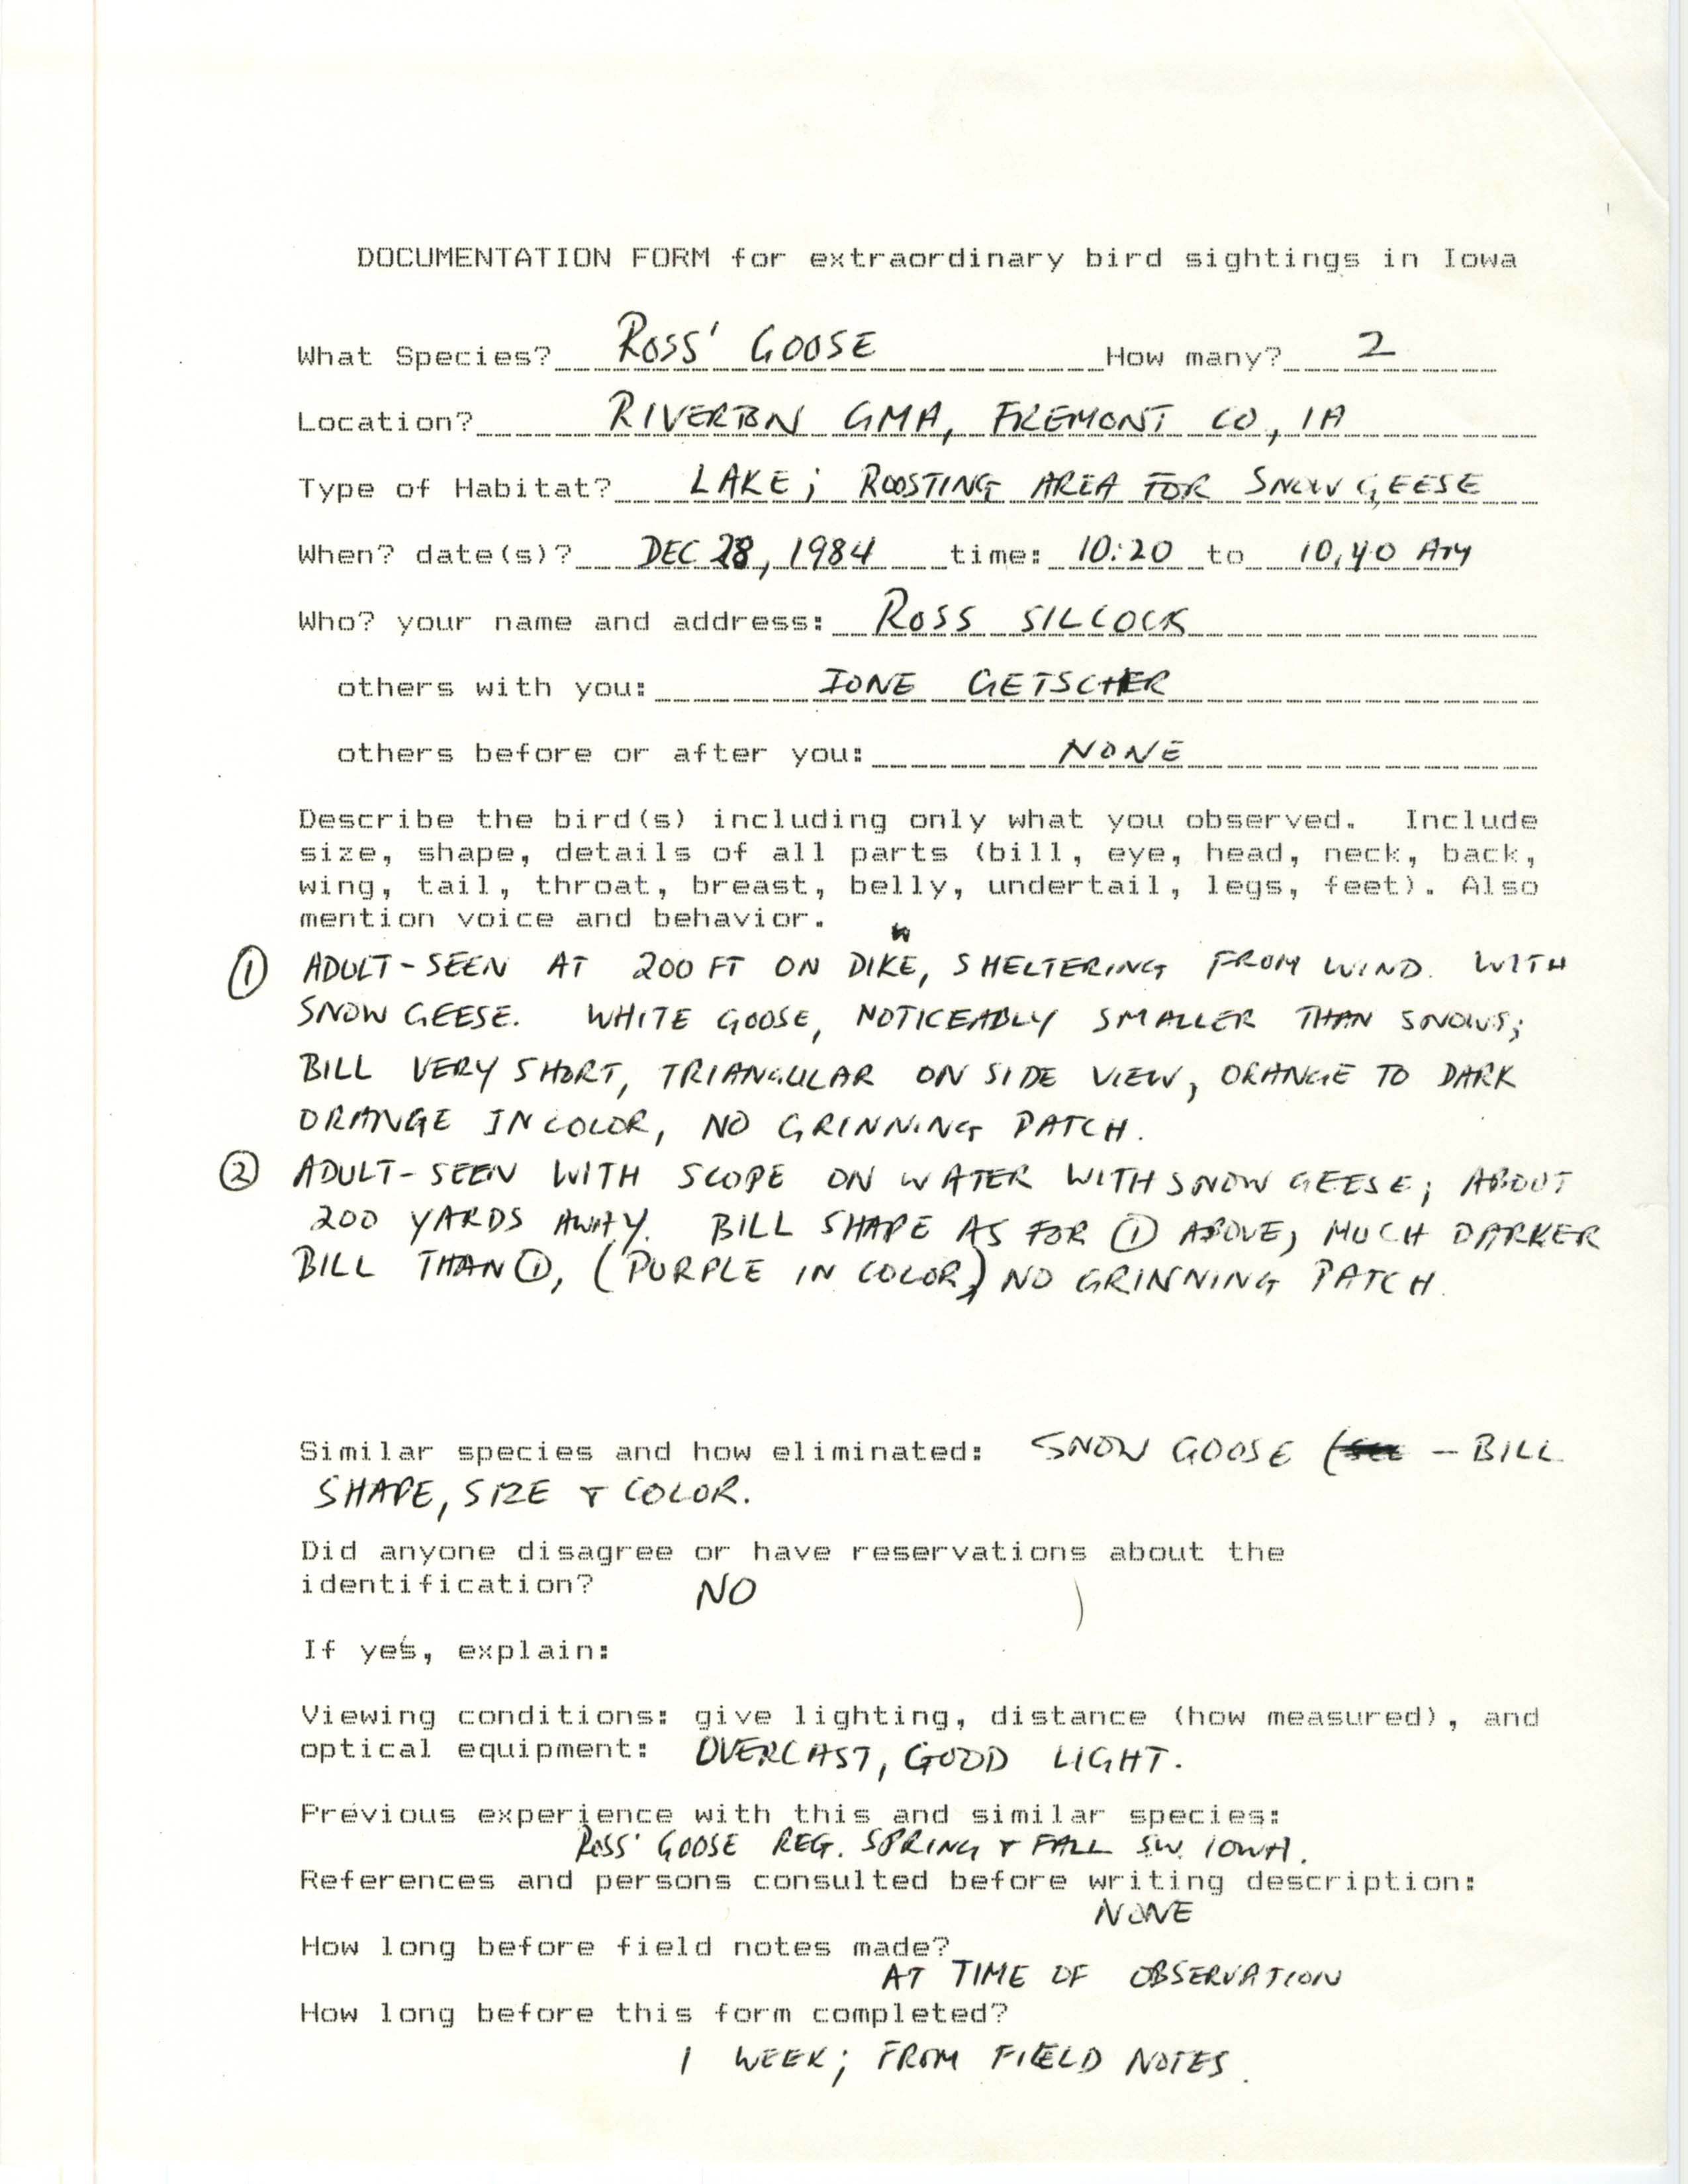 Rare bird documentation form for Ross' Goose at Riverton Game Management Area, 1984